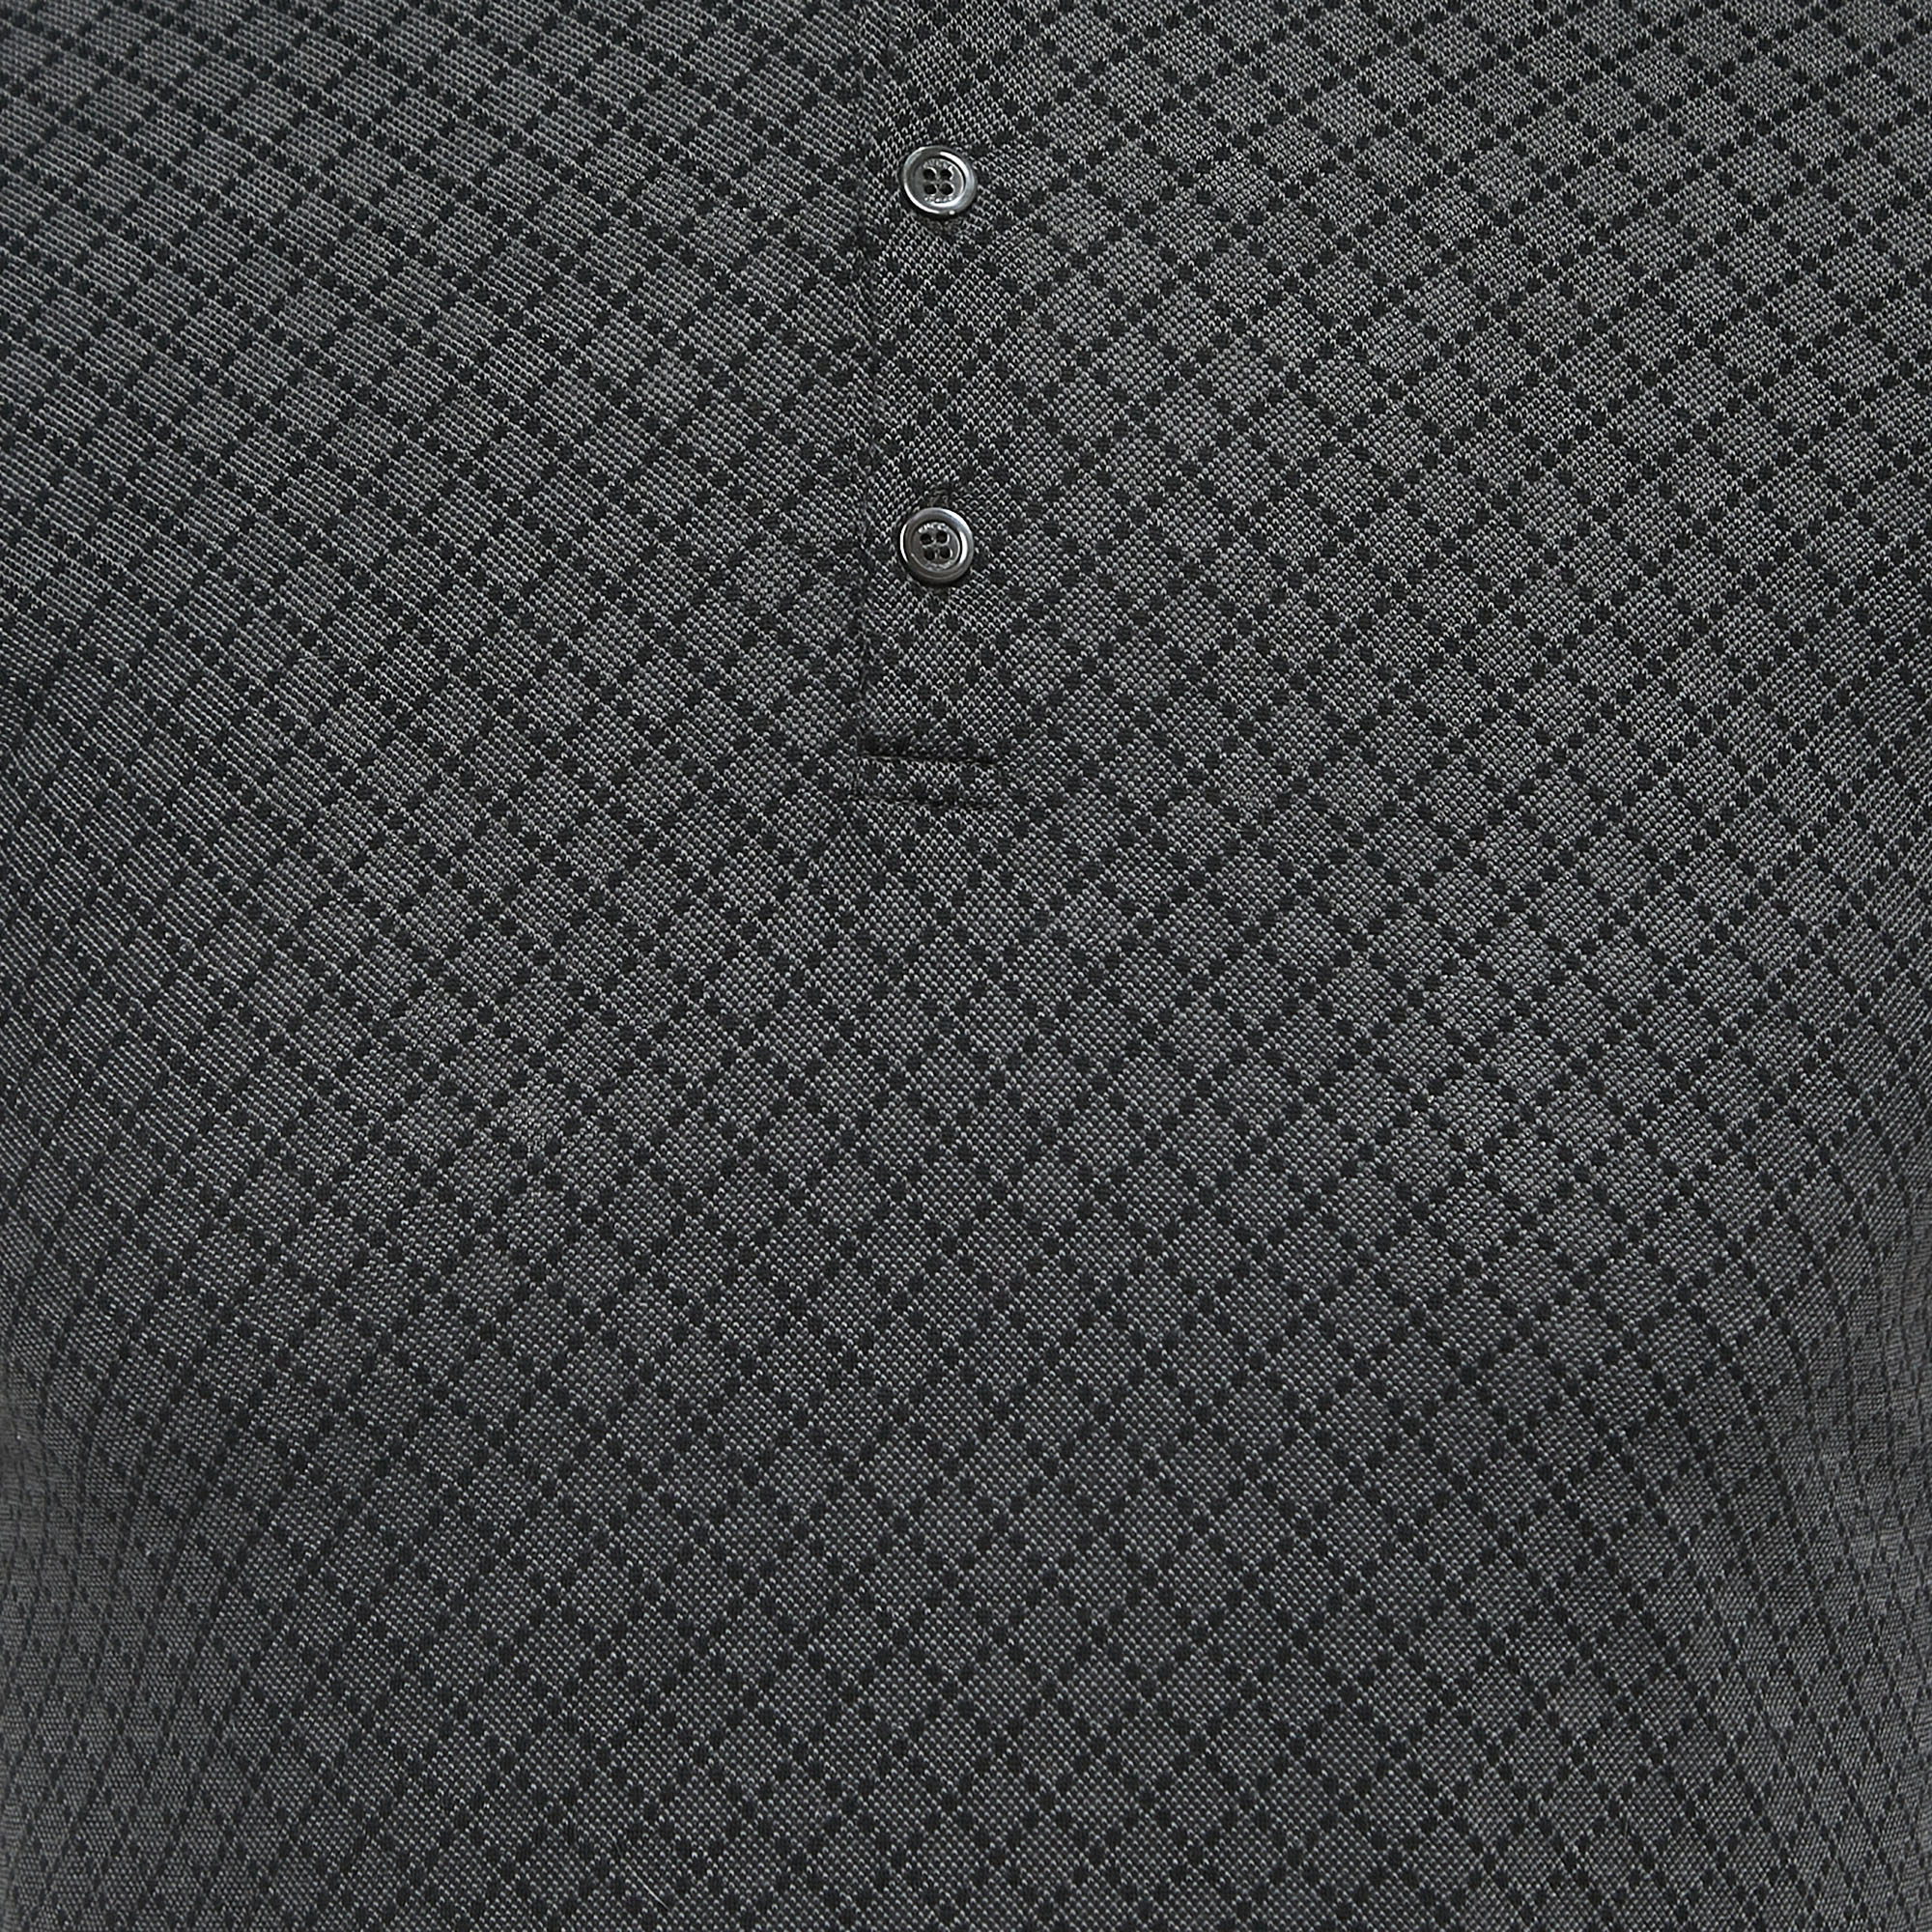 Gucci Black Patterned Cotton Web Stripe Detailed Polo T-Shirt XS